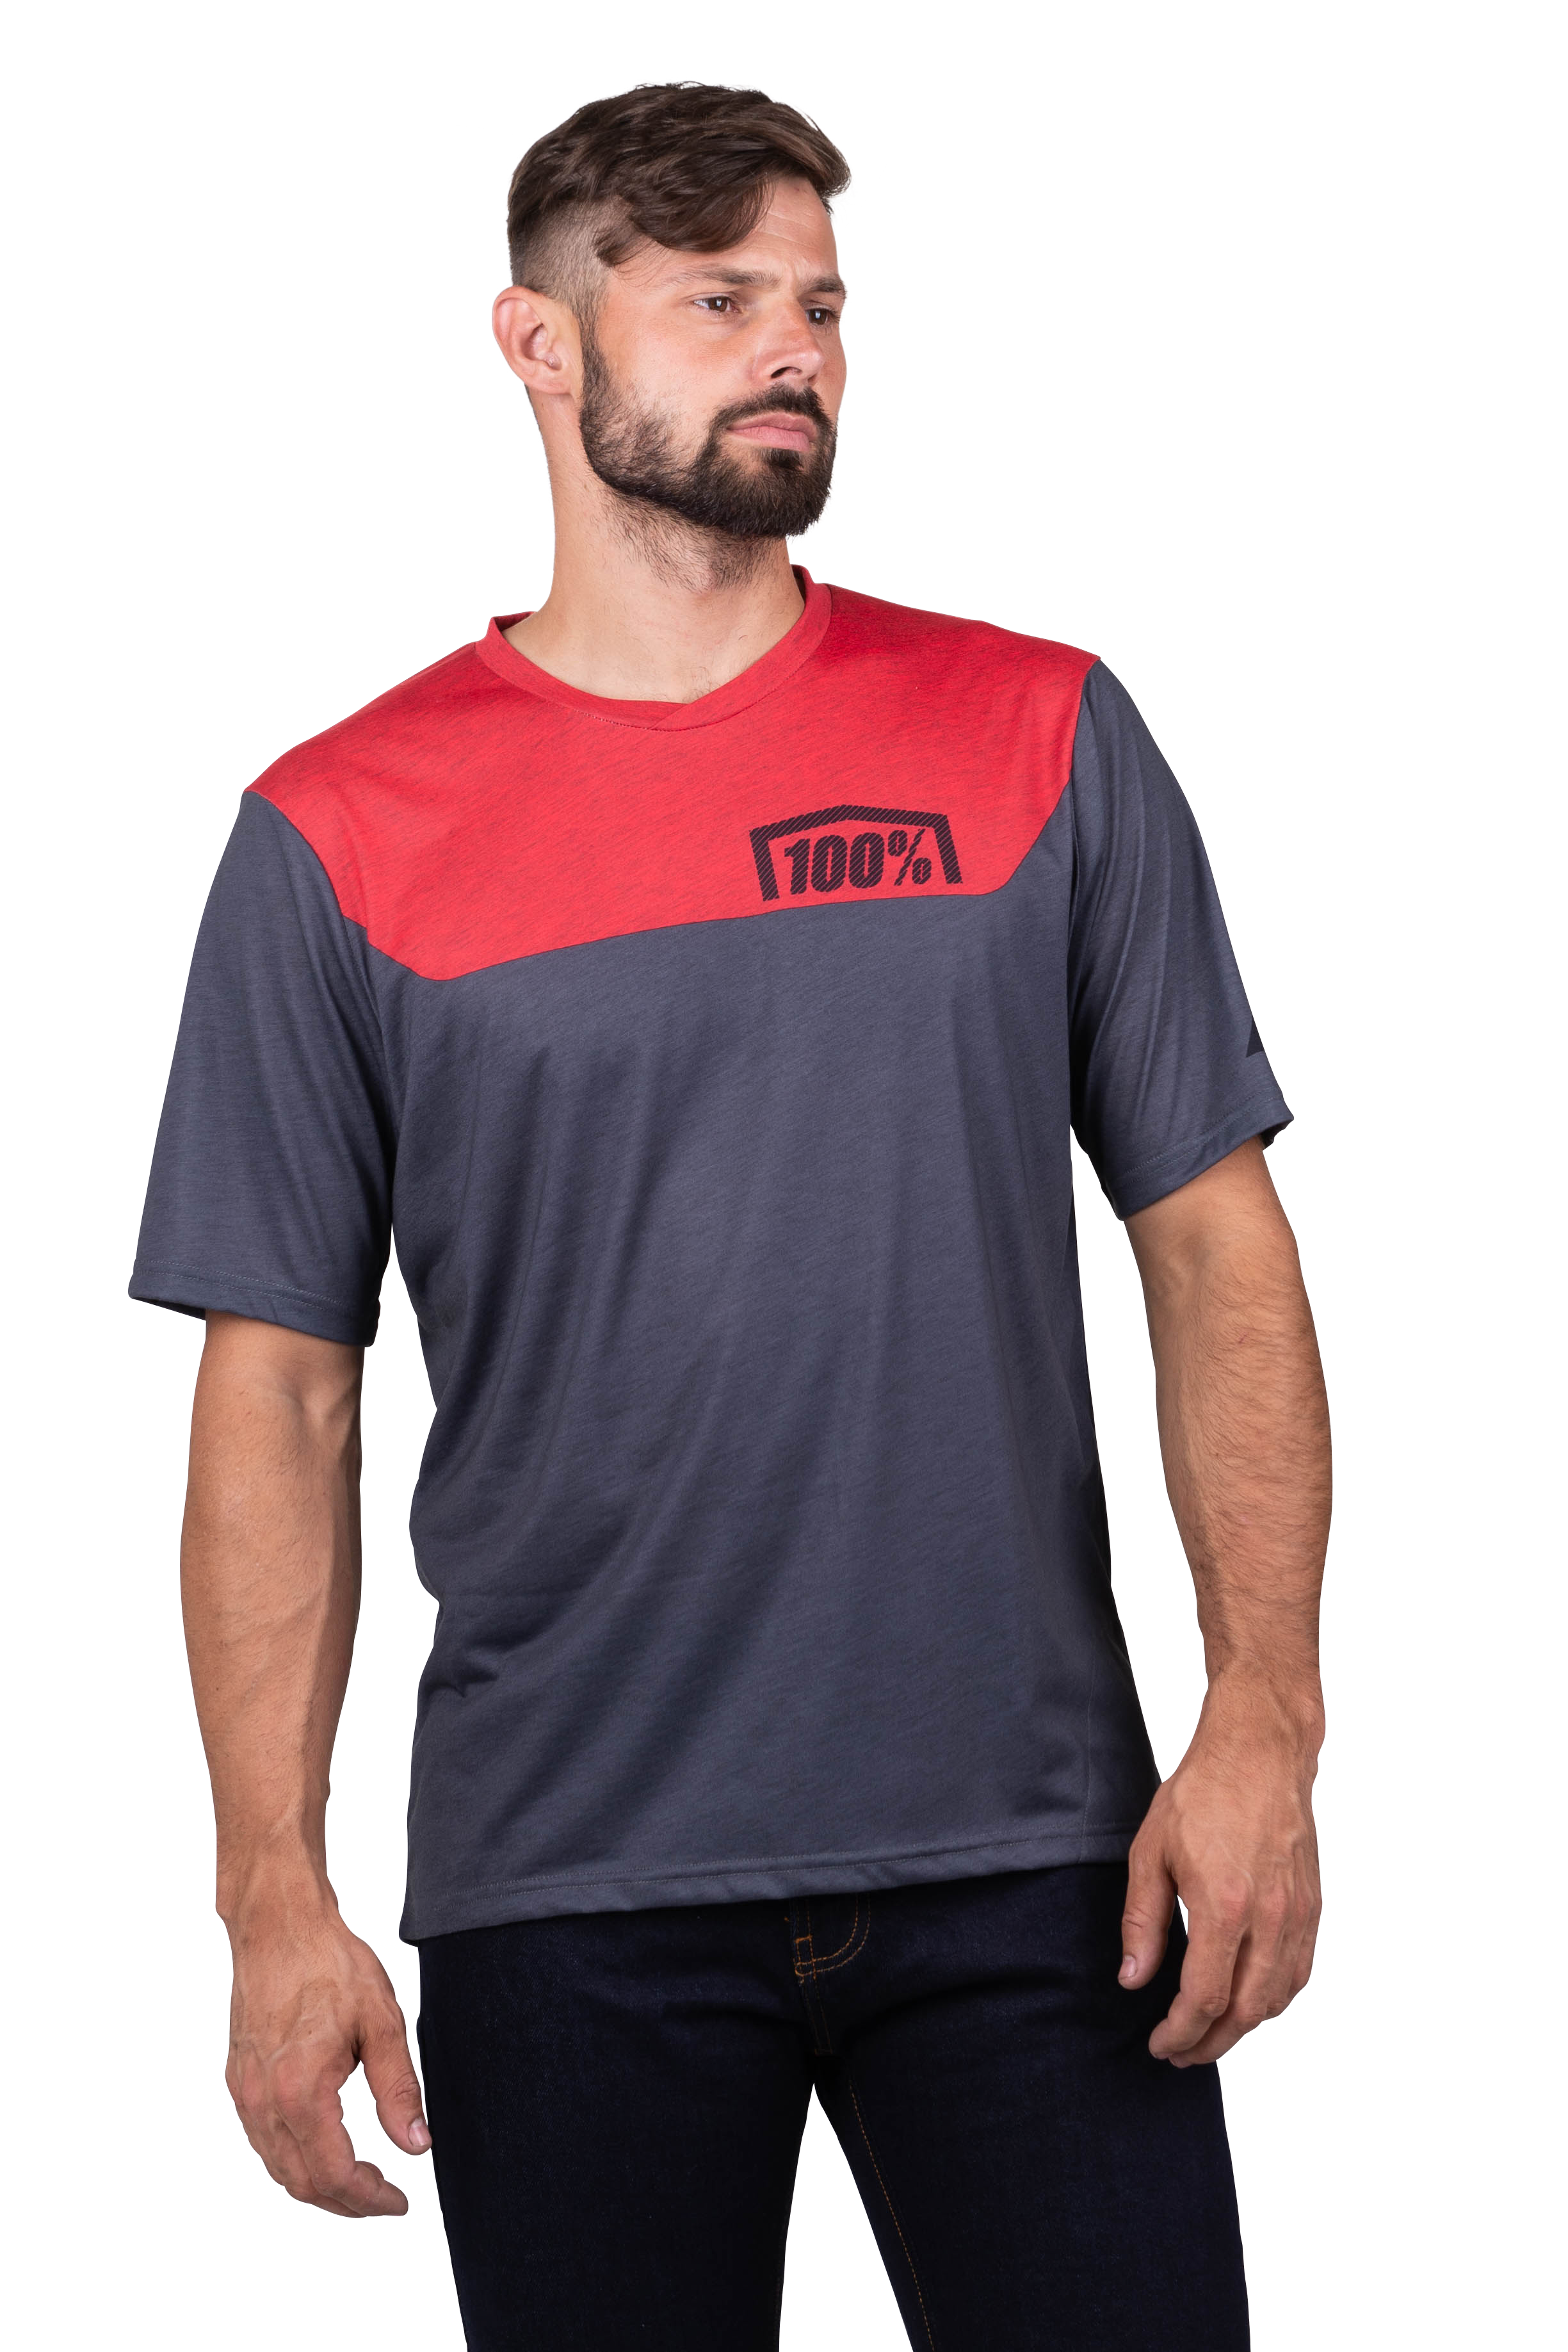 100% Camiseta de MTB  AIRMATIC Carbón-Rojo Racer